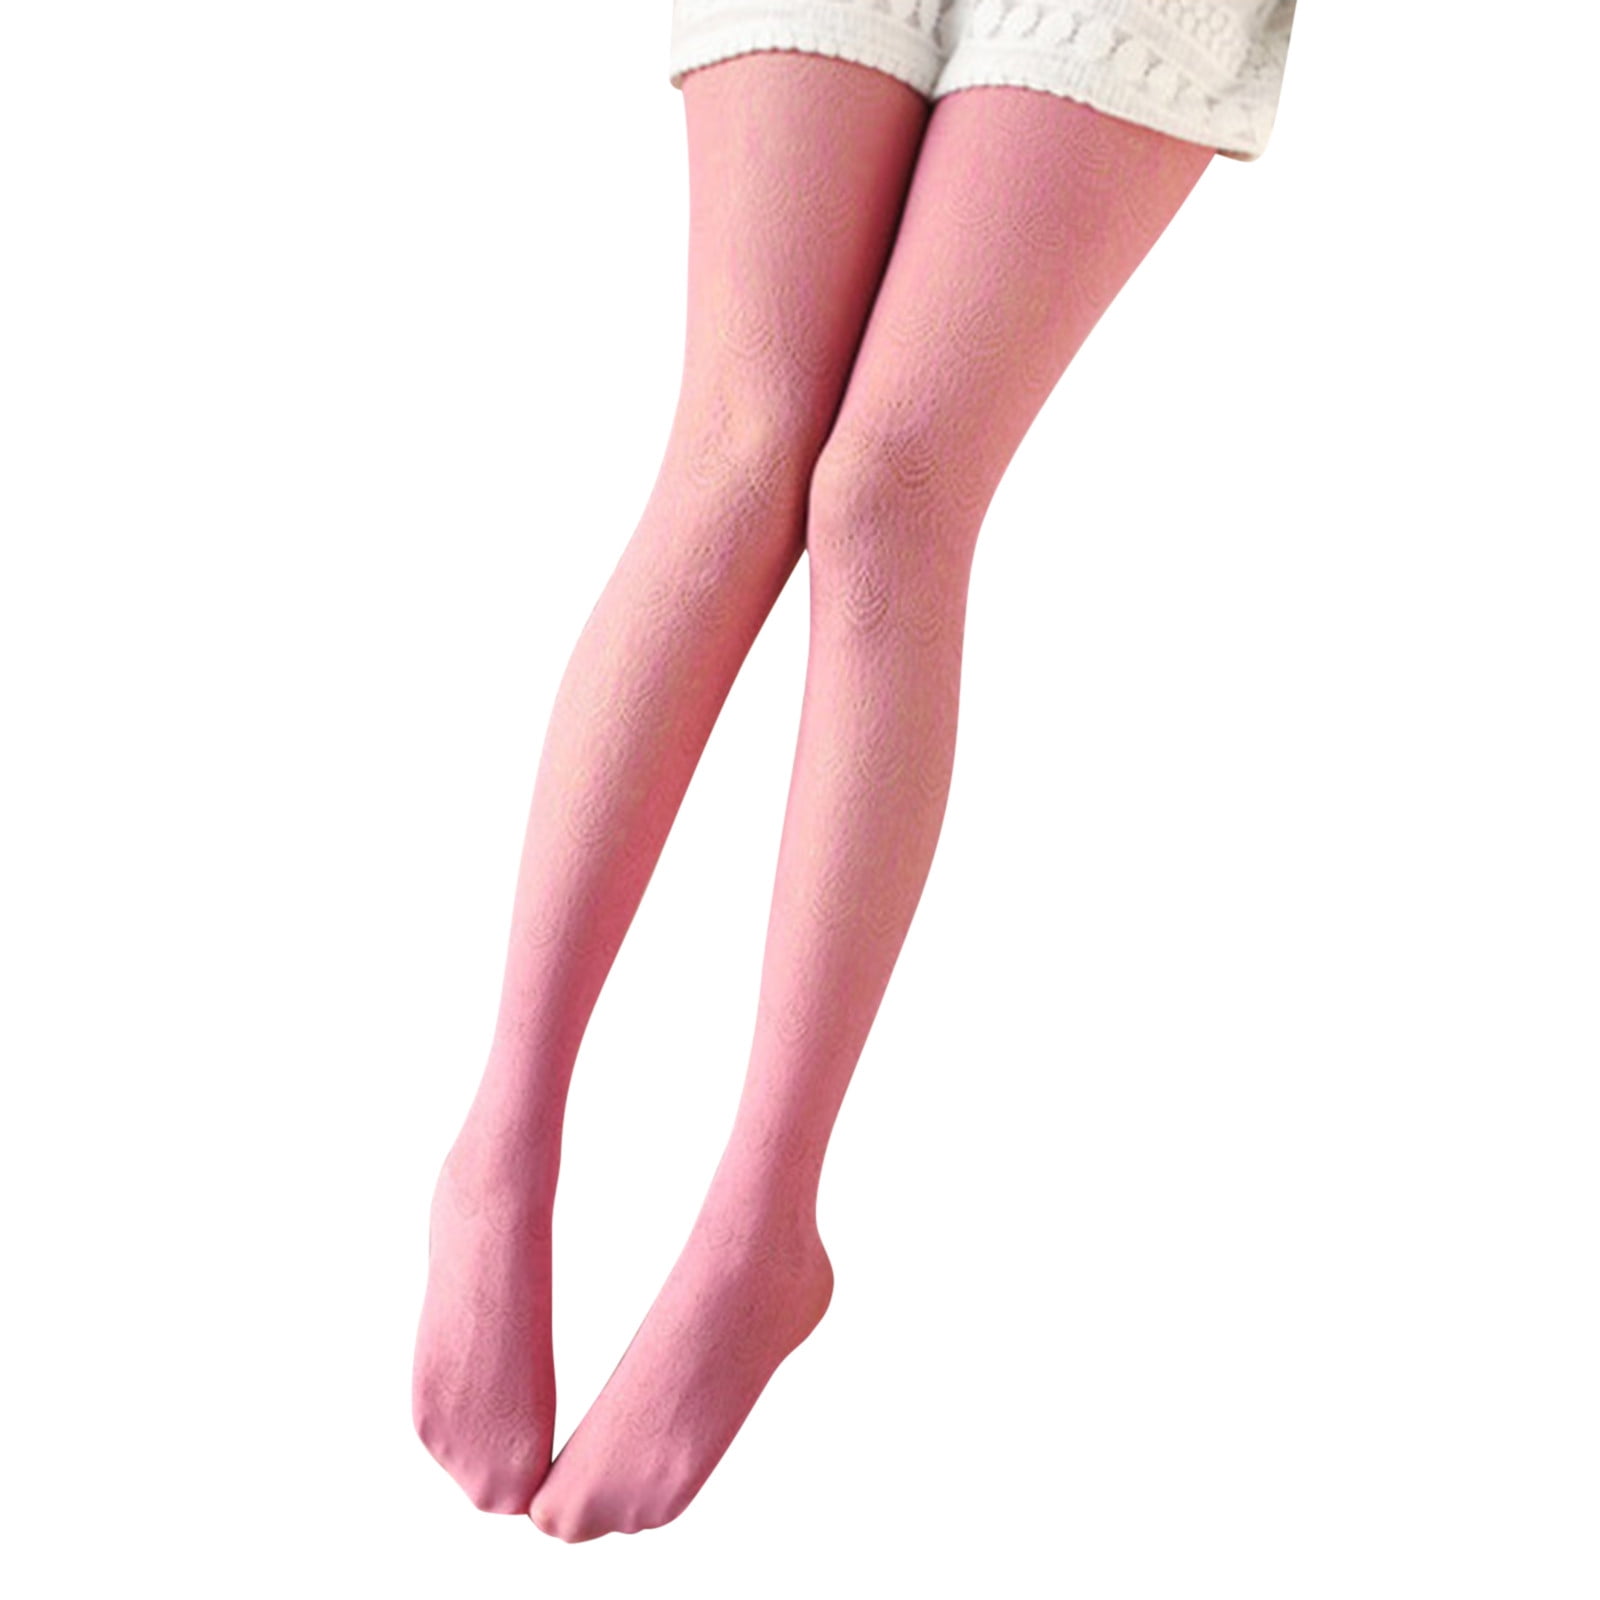 Stockings Legs